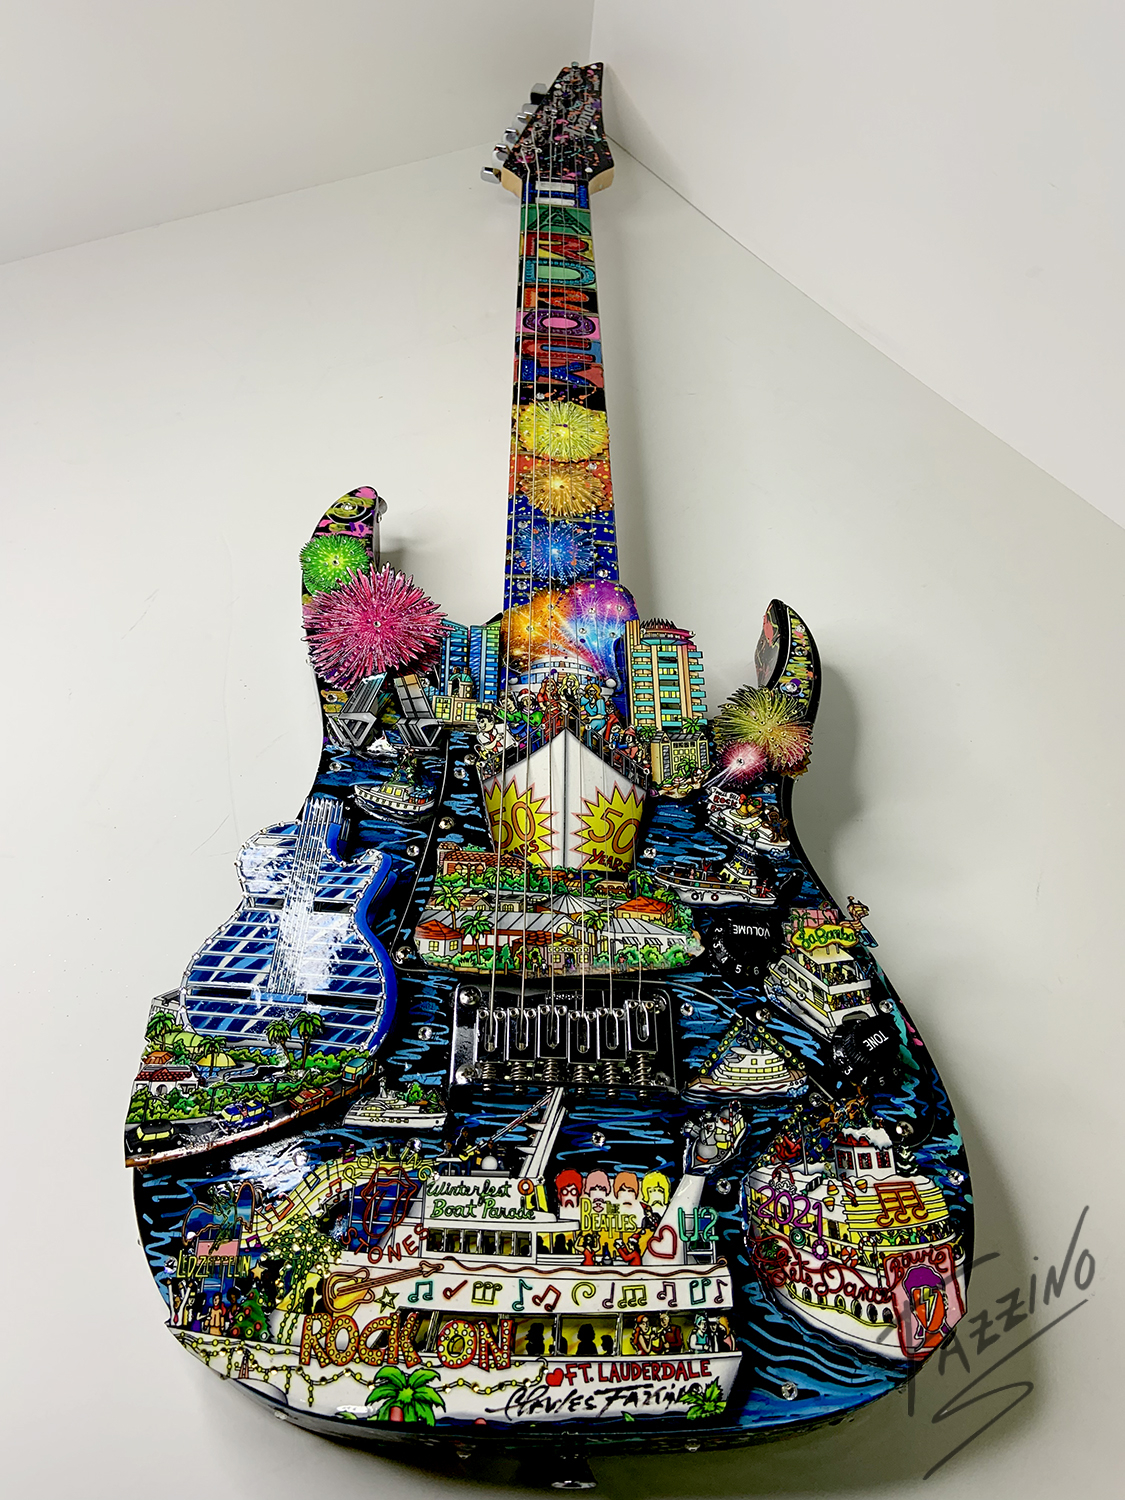 Charles Fazzino hand-painted, original rock guitar to commemorate Winterfest's 50th Anniversary